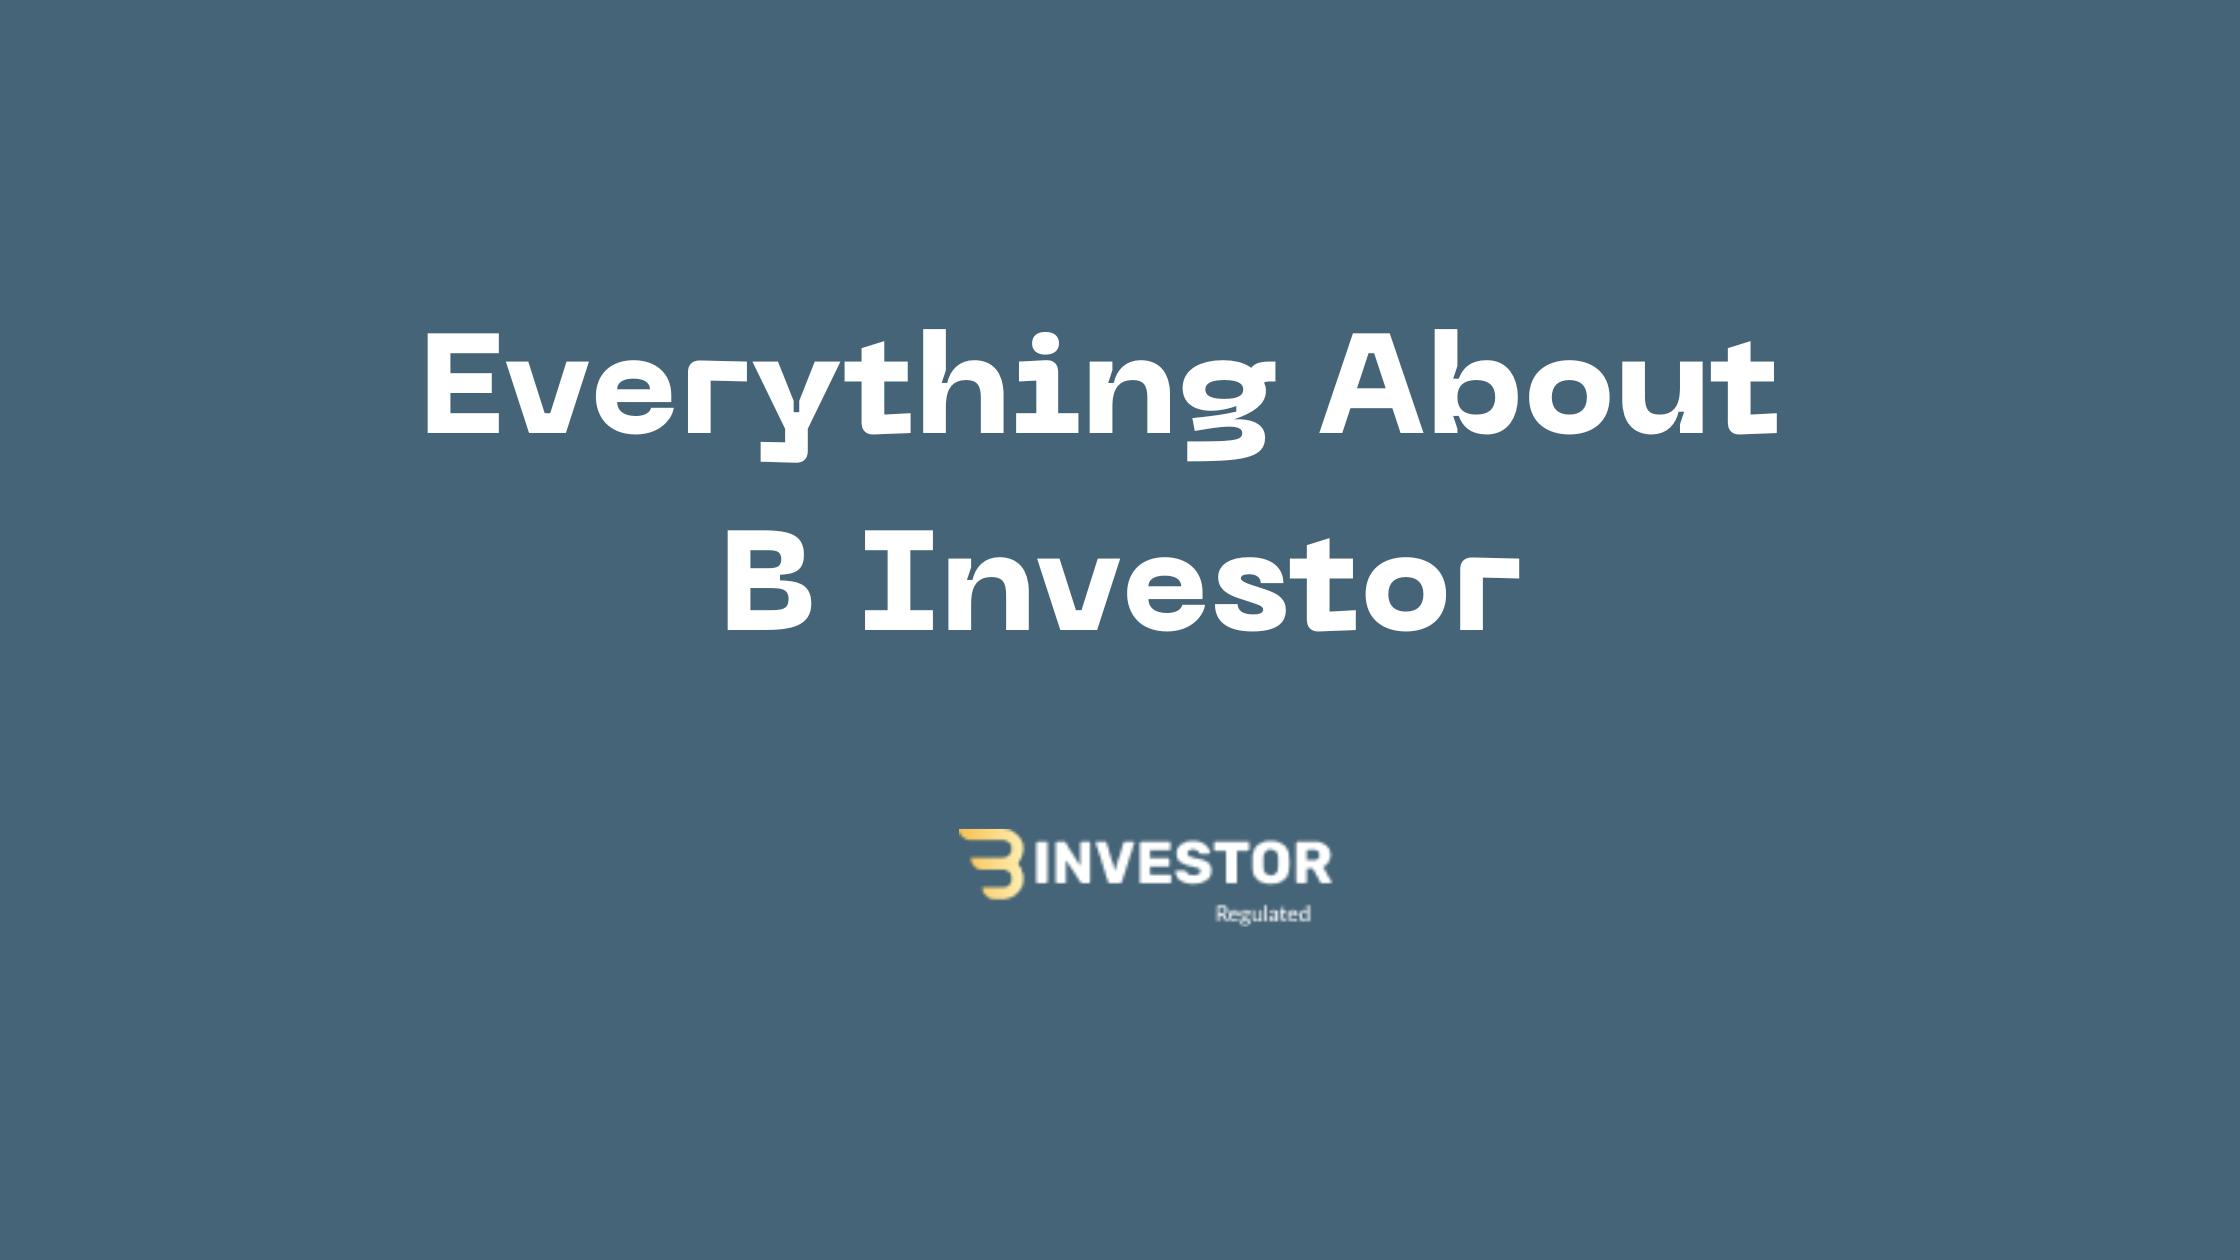 B Investor Blog Post